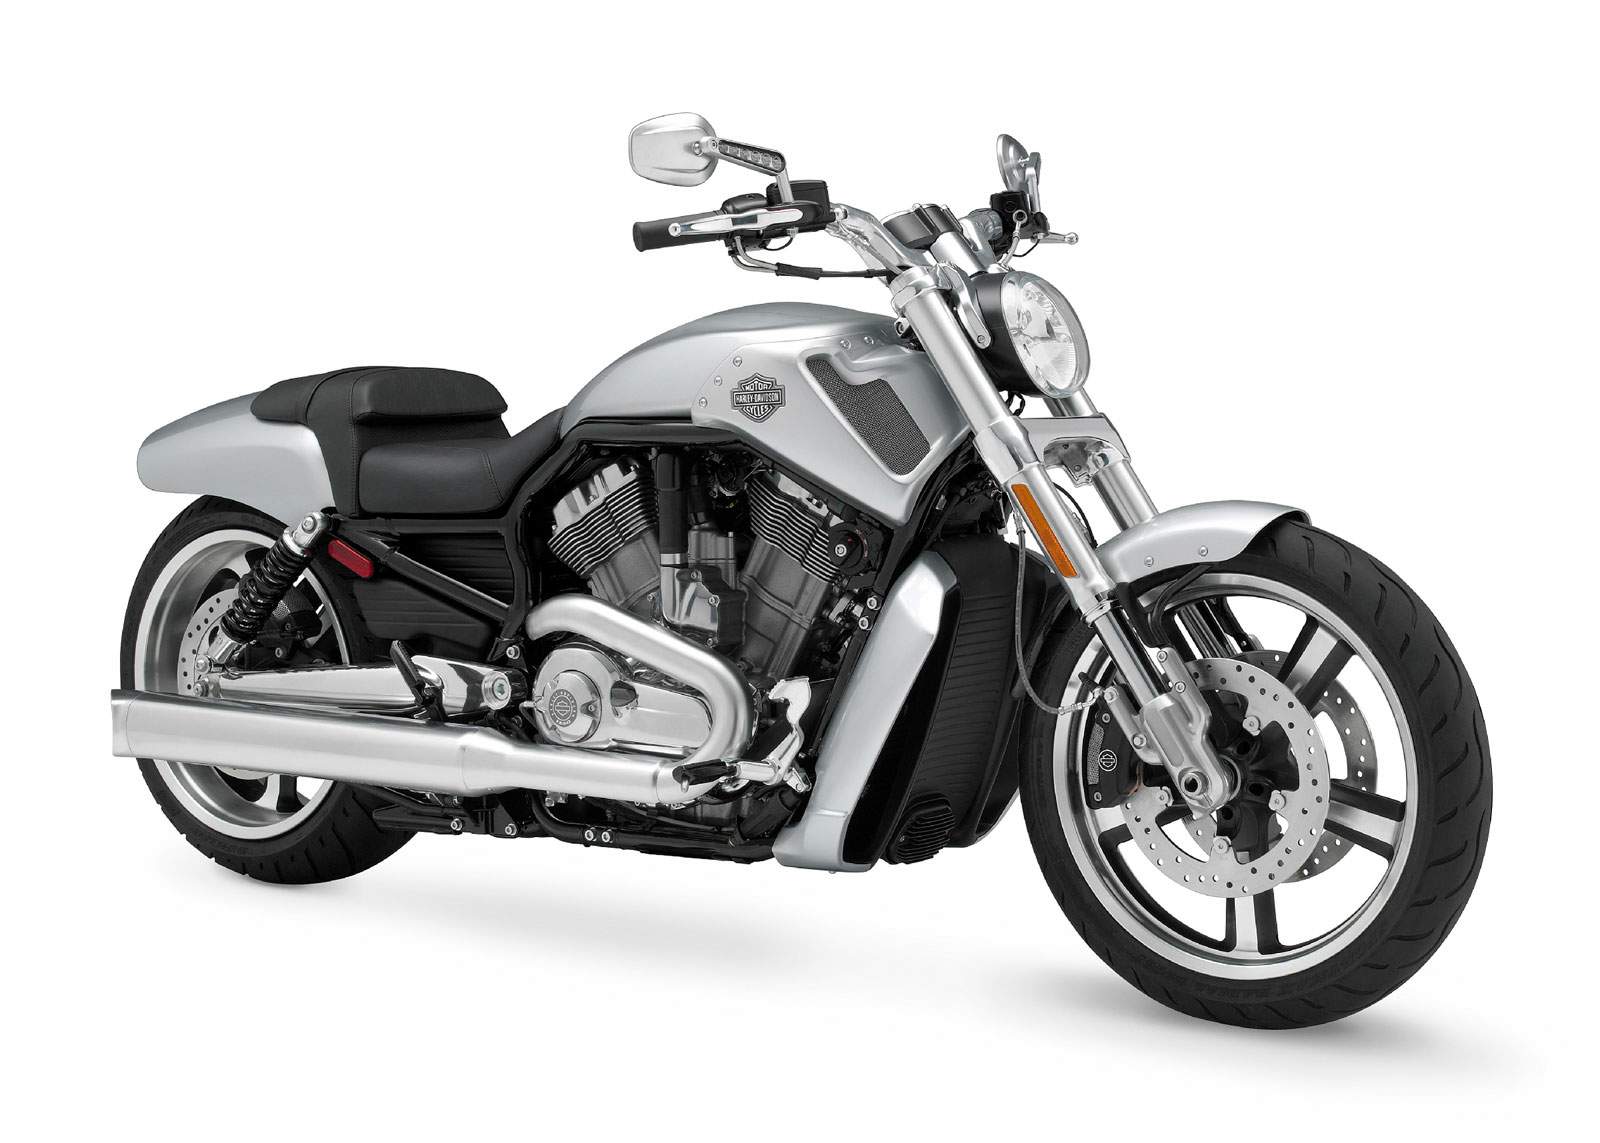 Harley Davidson VRSCF V-Rod Muscle For Sale Specifications, Price and Images